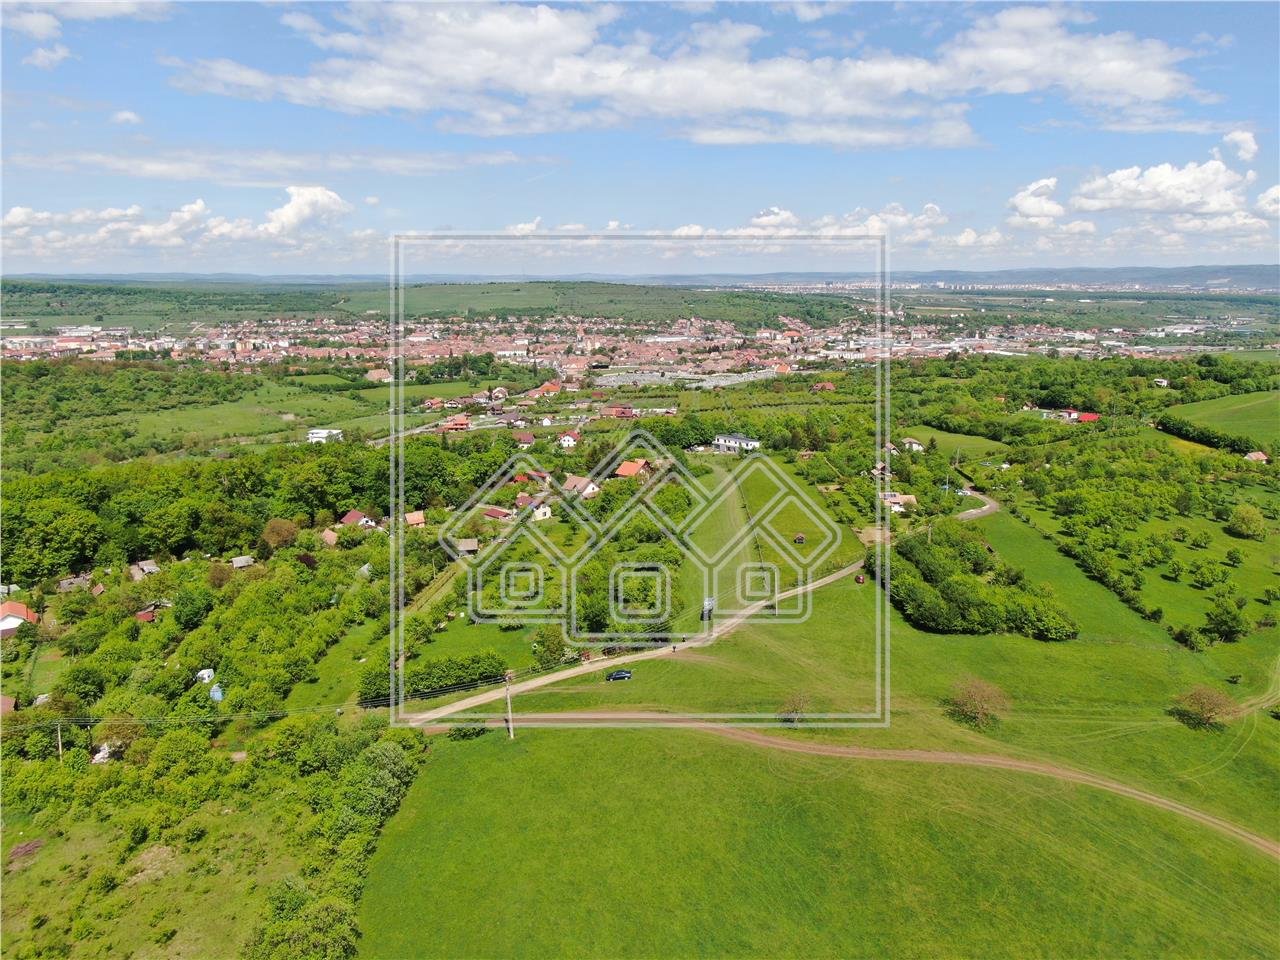 Land for sale in Sibiu - Tocile - urban - 4210 sqm